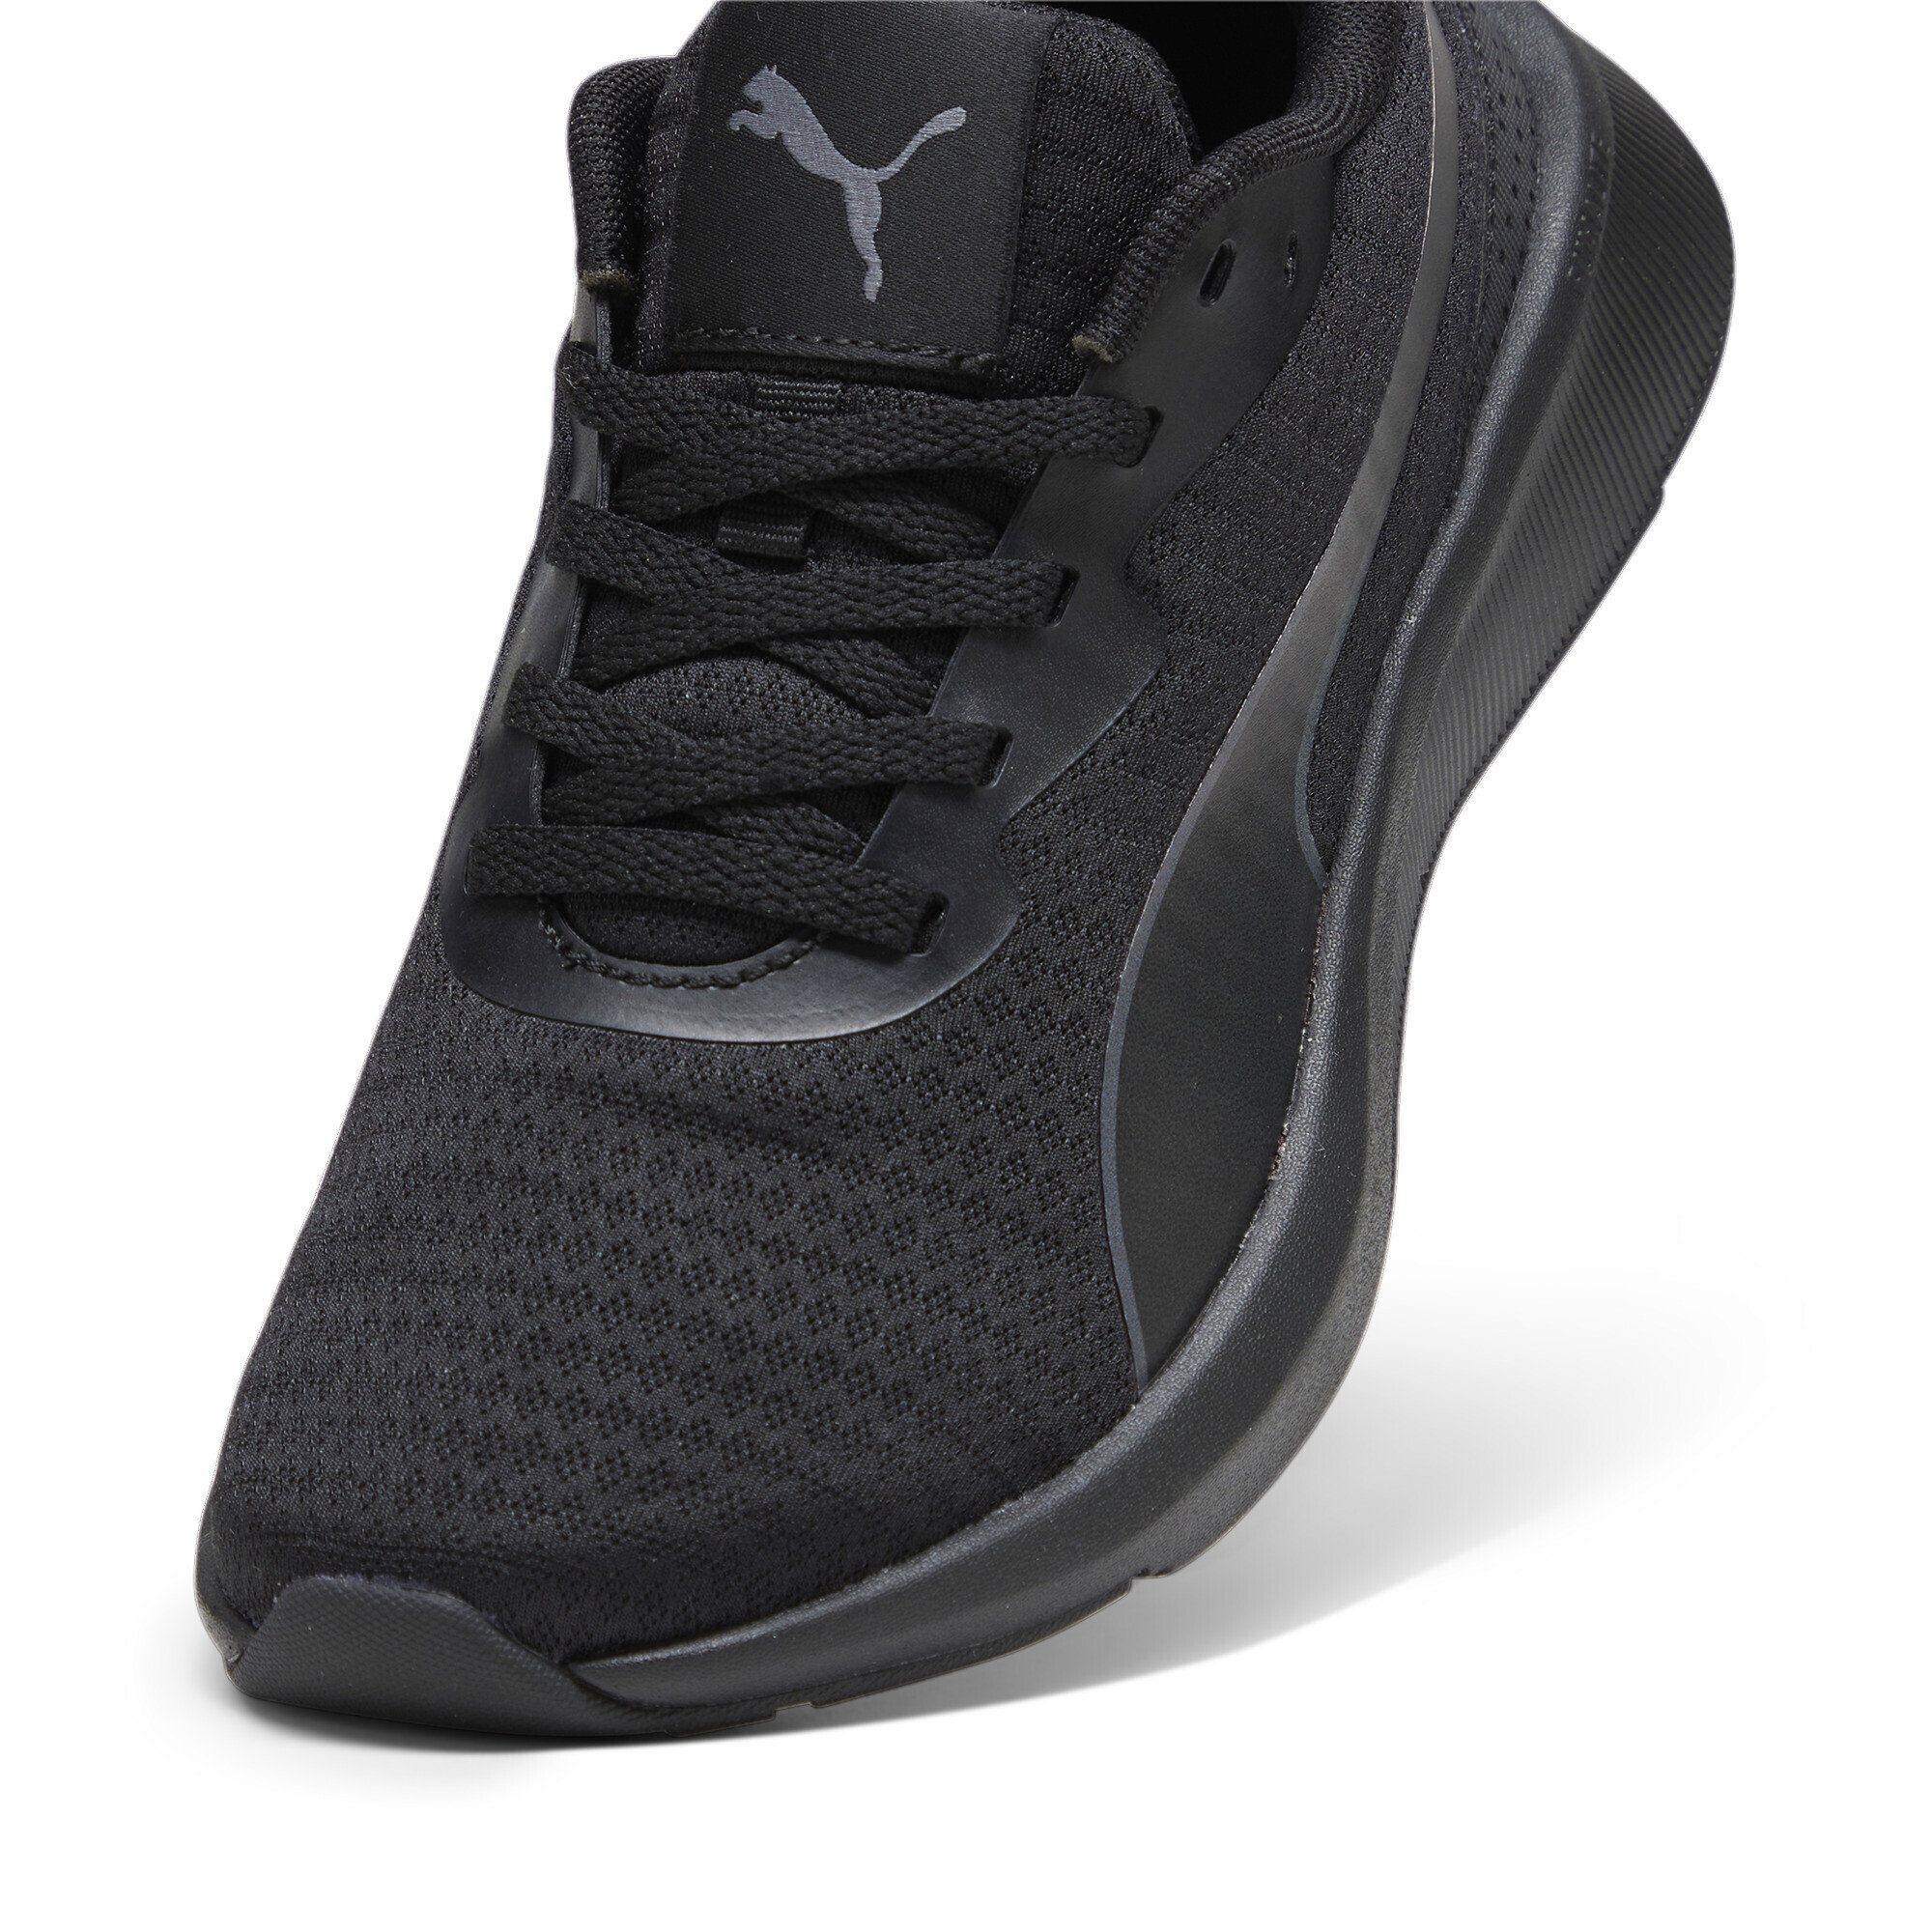 Sneakers Gray PUMA Black Cool Trainingsschuh Lite Flyer Jugendliche Dark